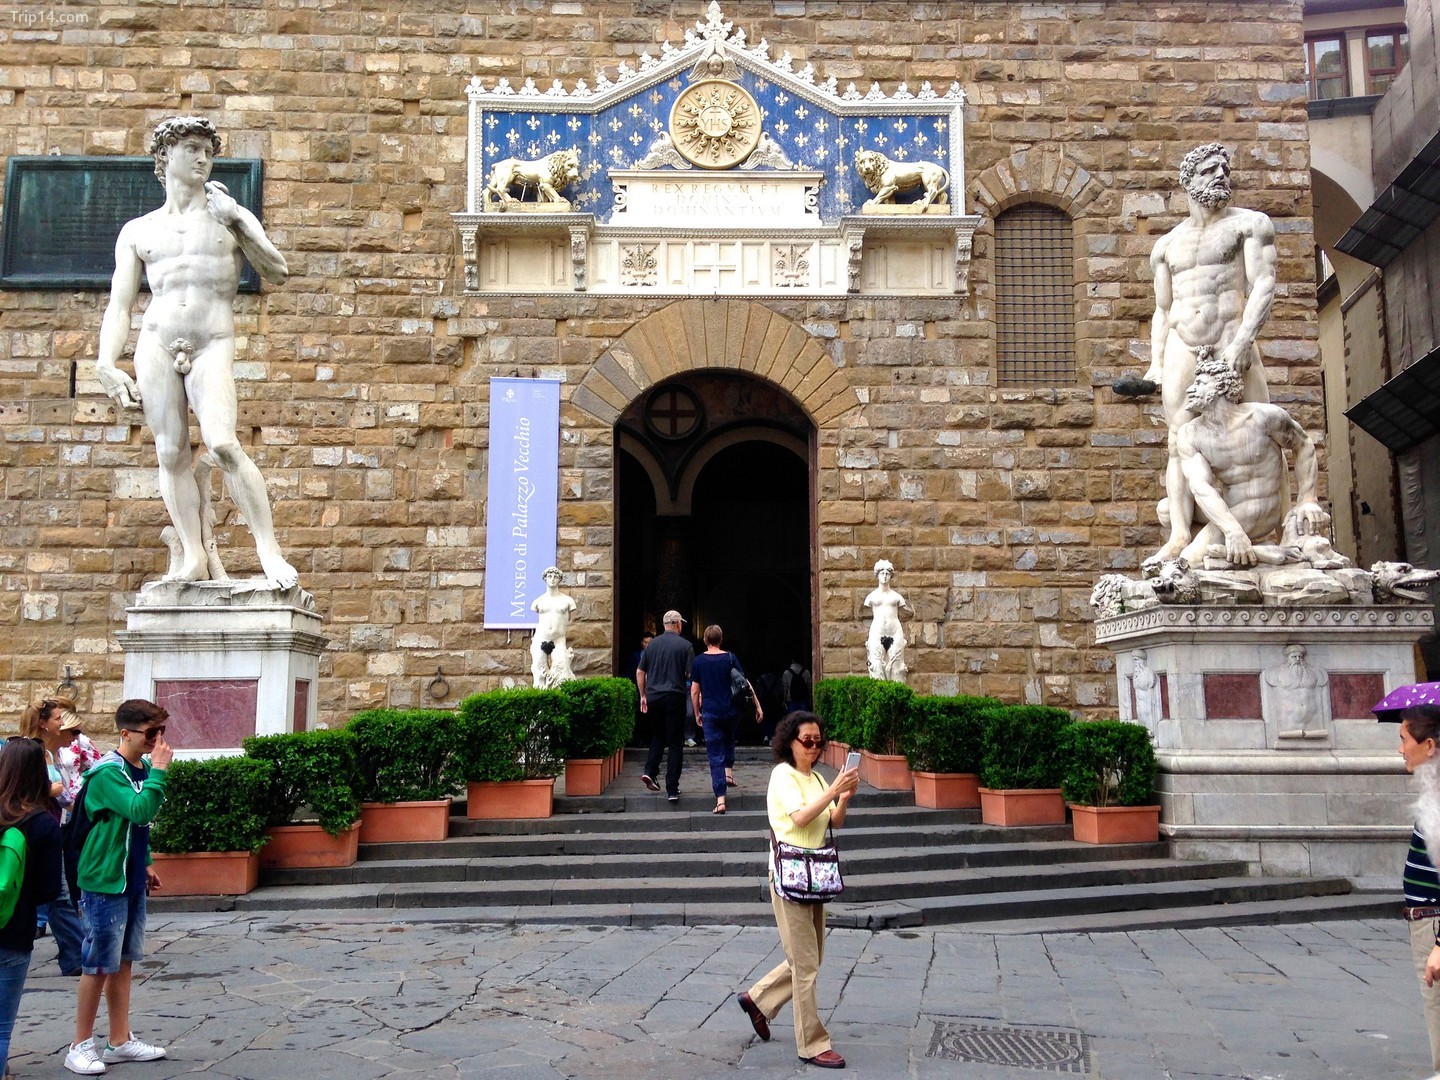 Lối vào Palazzo Vecchio, bên trái: David của Michelangelo